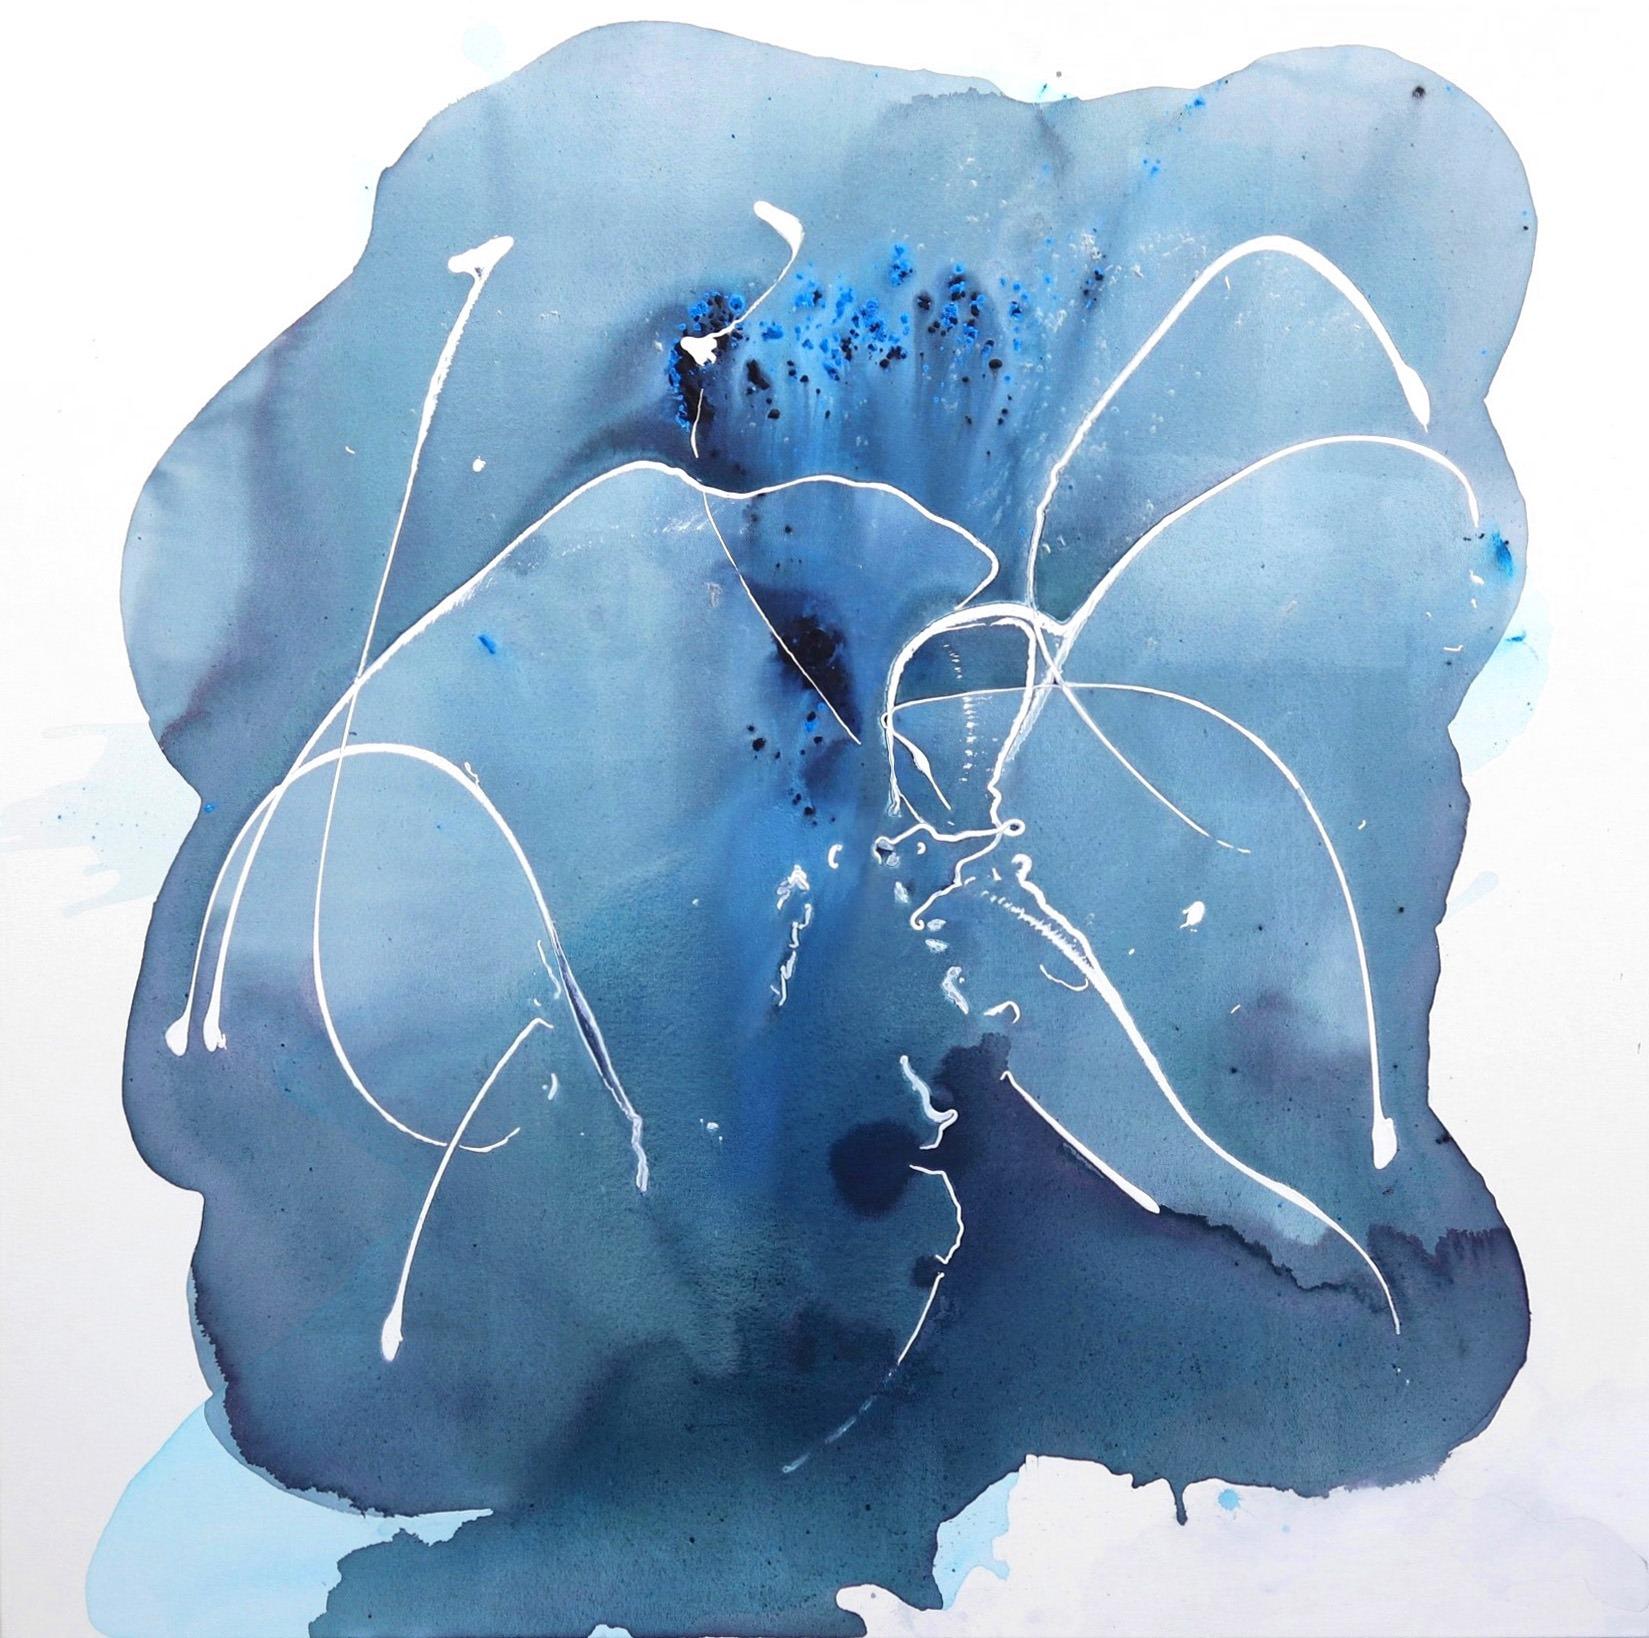 Abstract Painting Clara Berta - In The Zone - Grande peinture abstraite contemporaine minimaliste bleue surdimensionnée